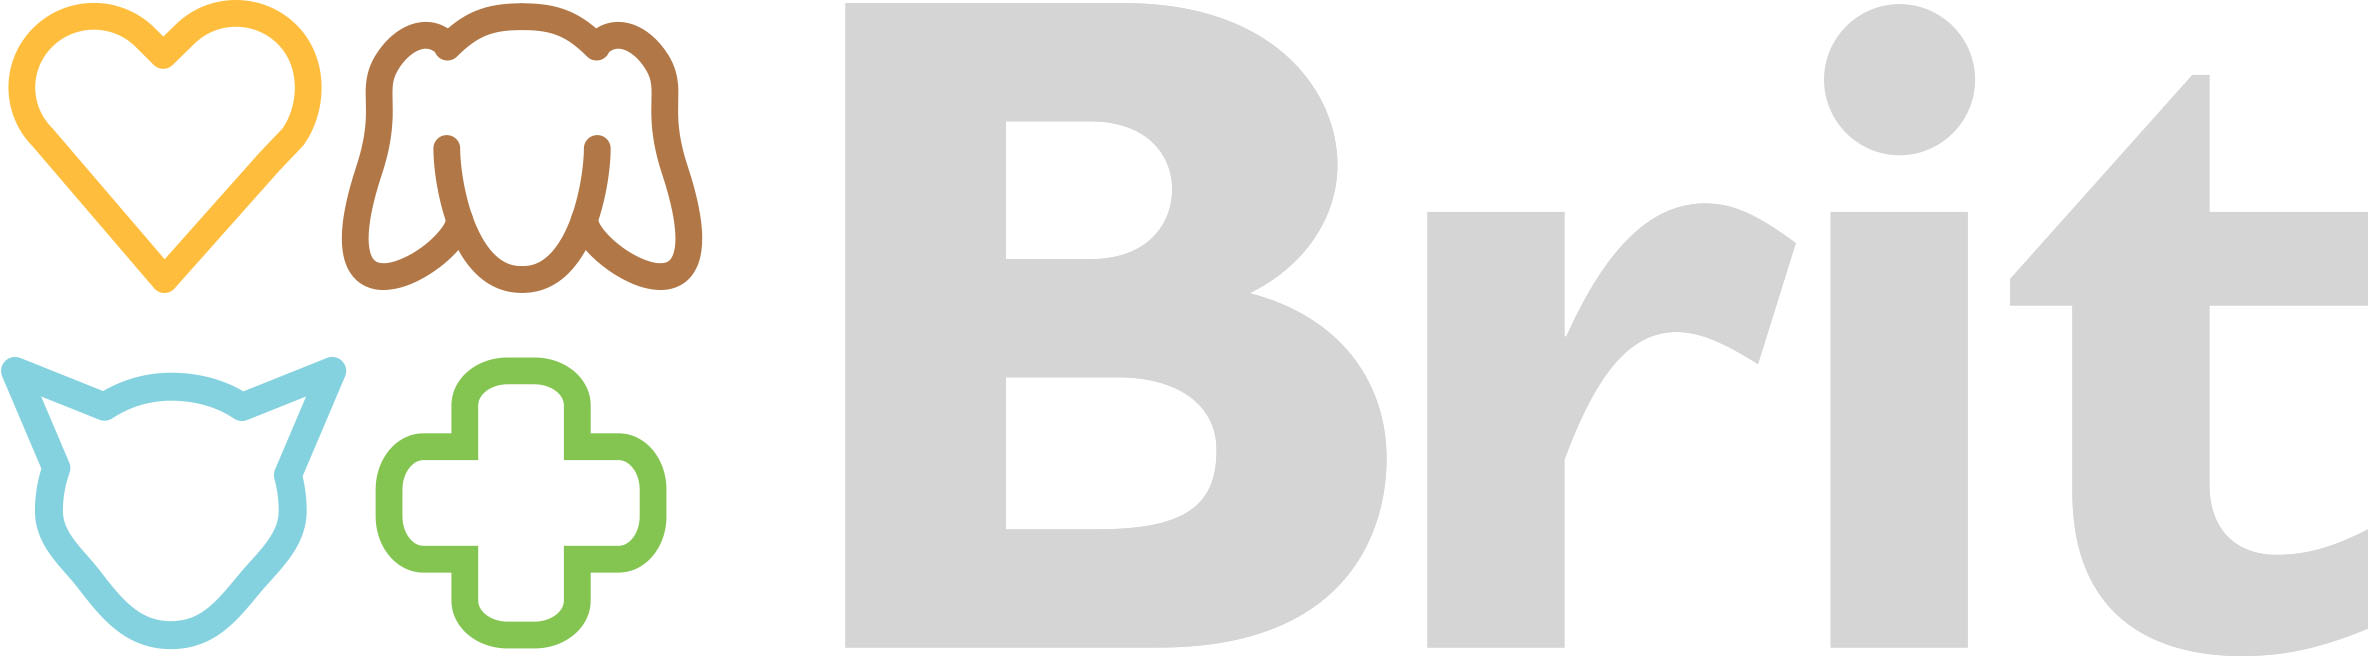 Brand logo basic